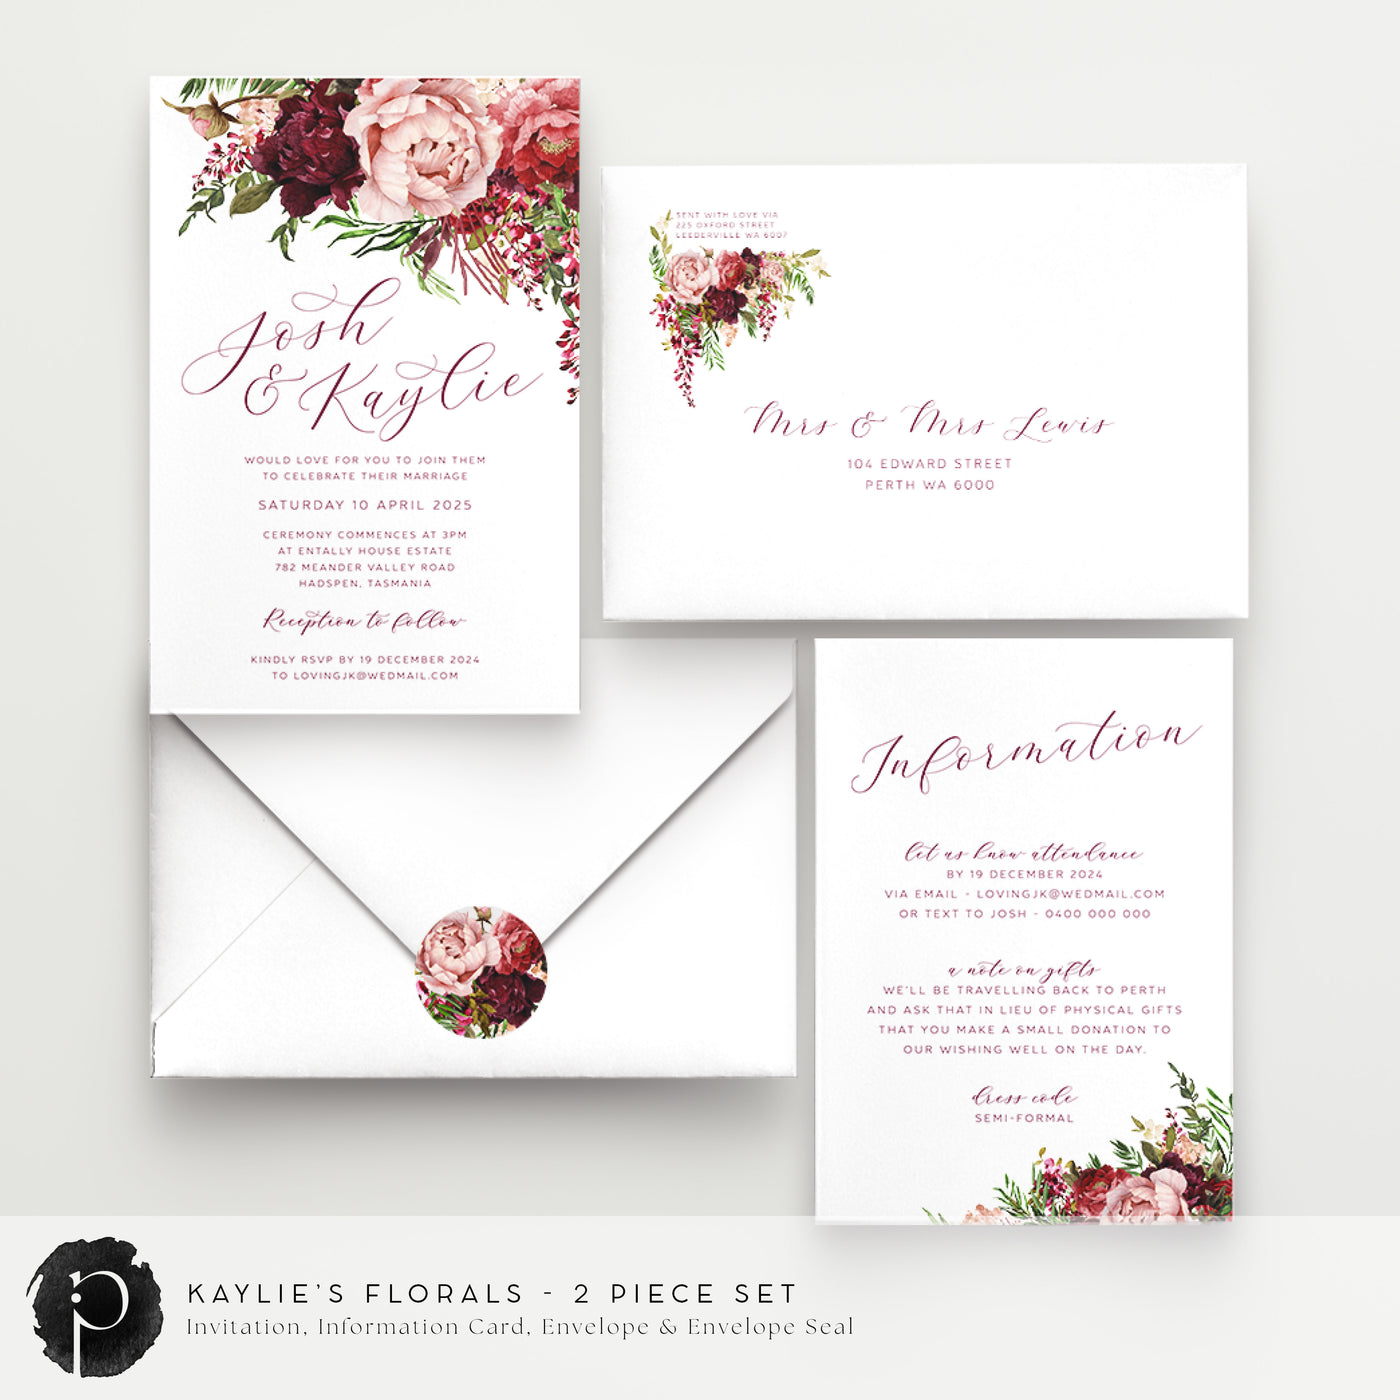 Kaylie's Florals - Wedding Invitation & Information/Details Card Set